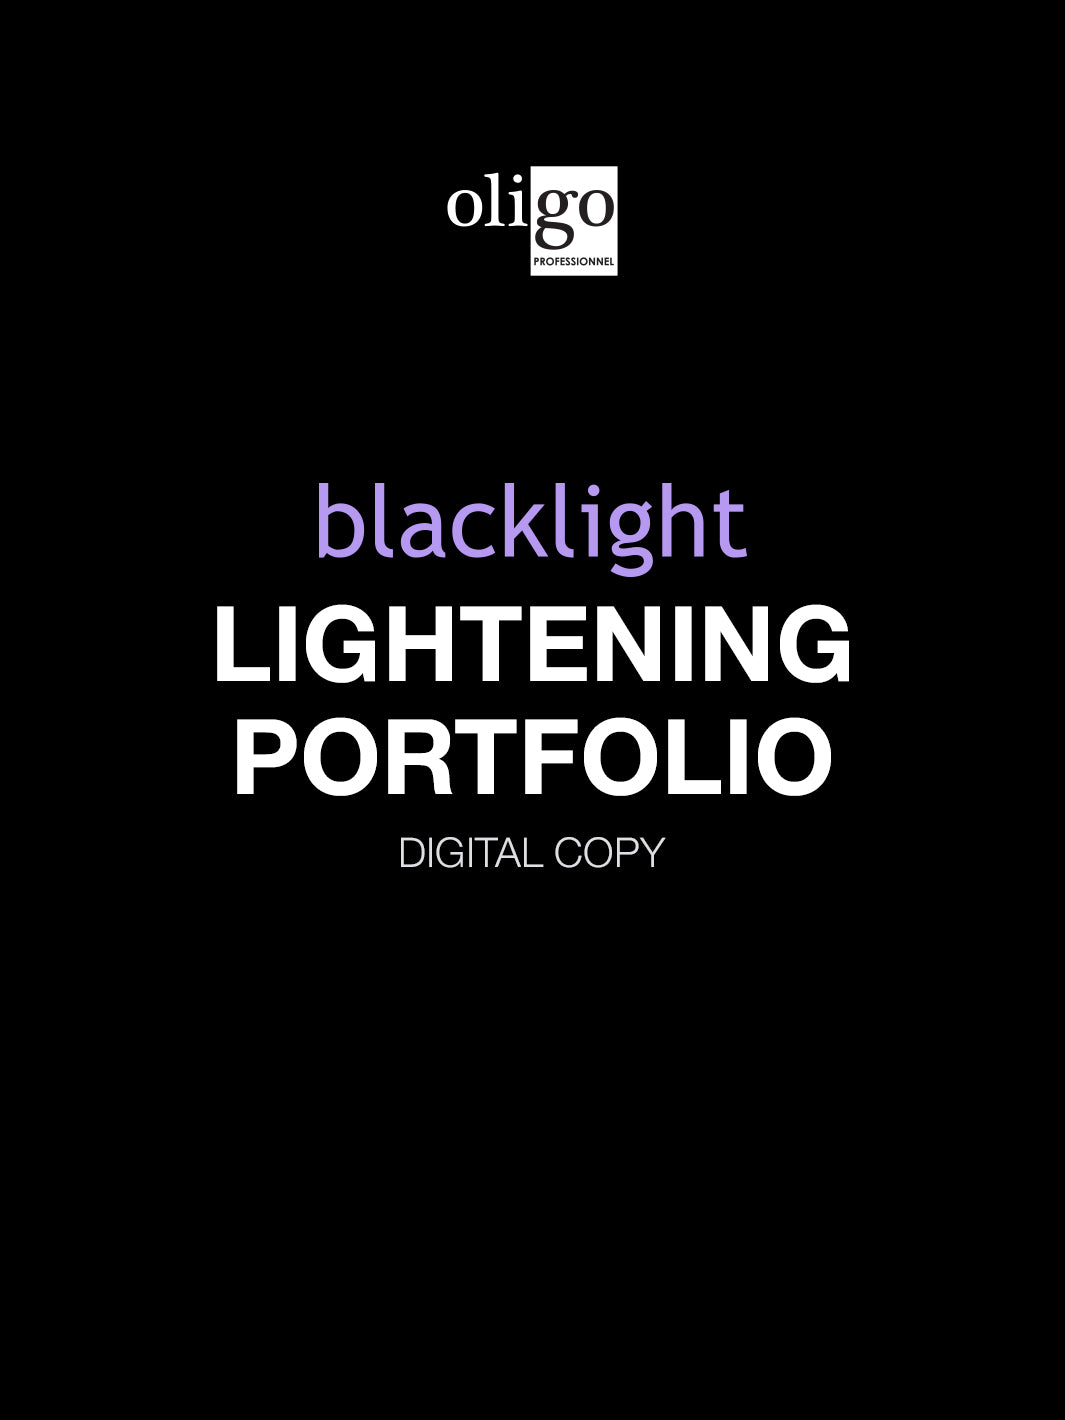 Oligo Blacklight Lightening Portfolio (digital copy)